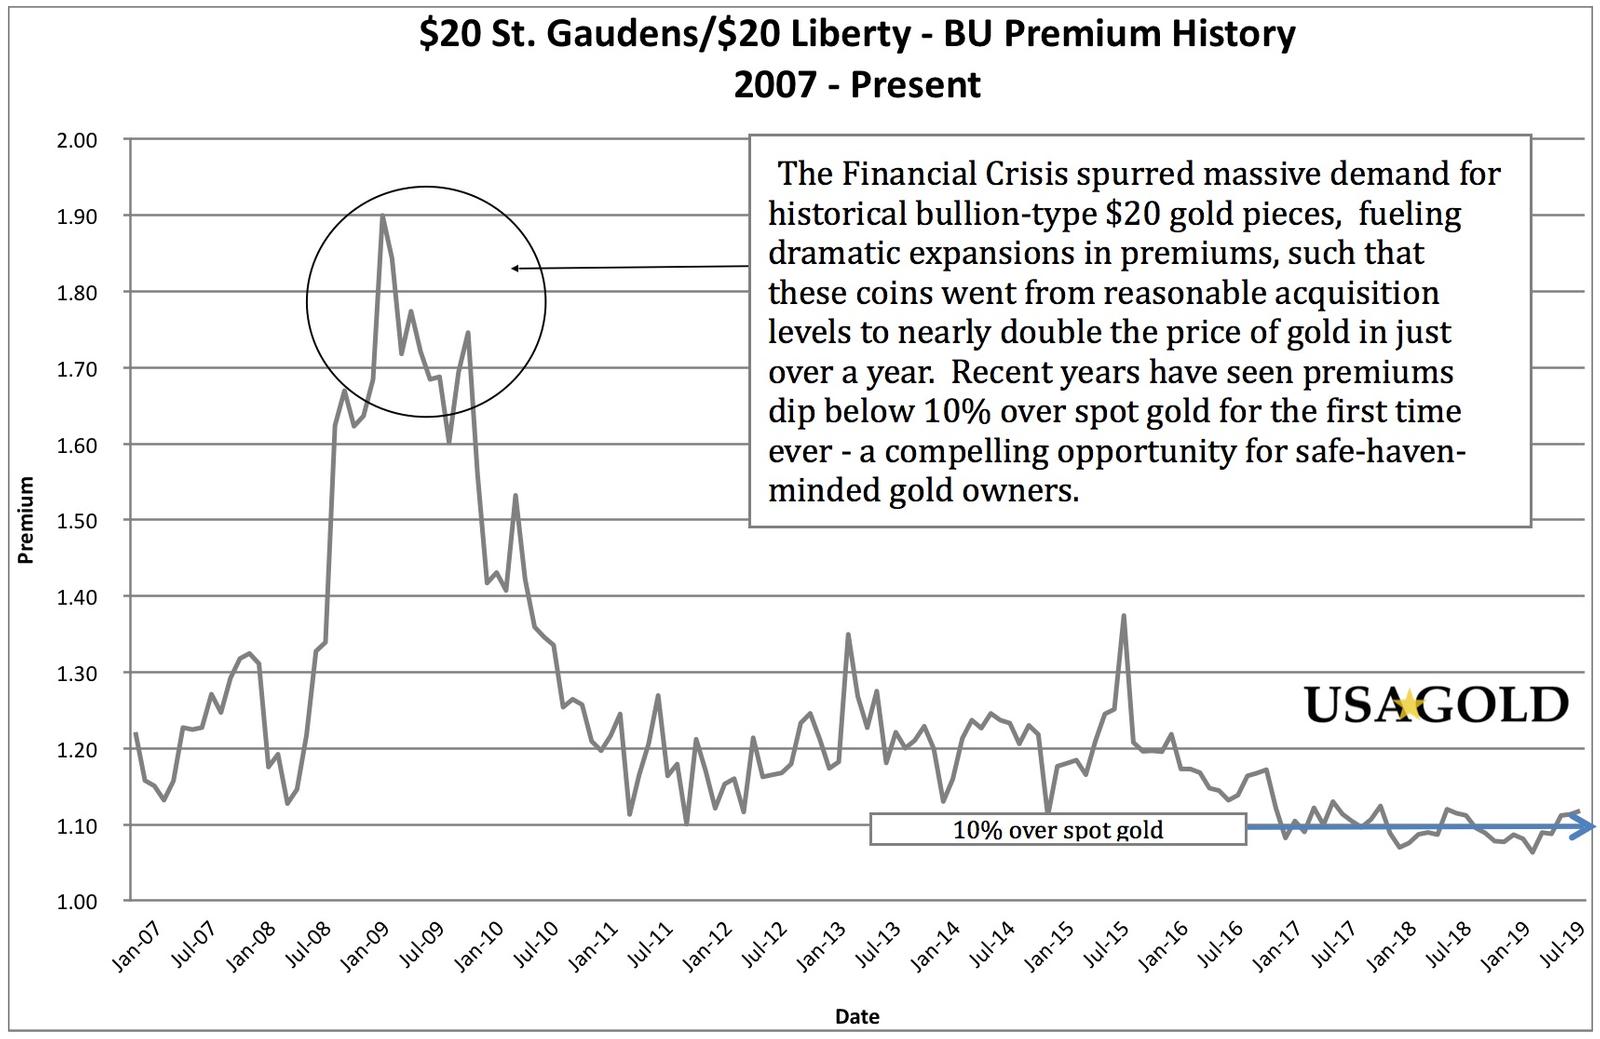 Line chart showing $20 Liberty premium history